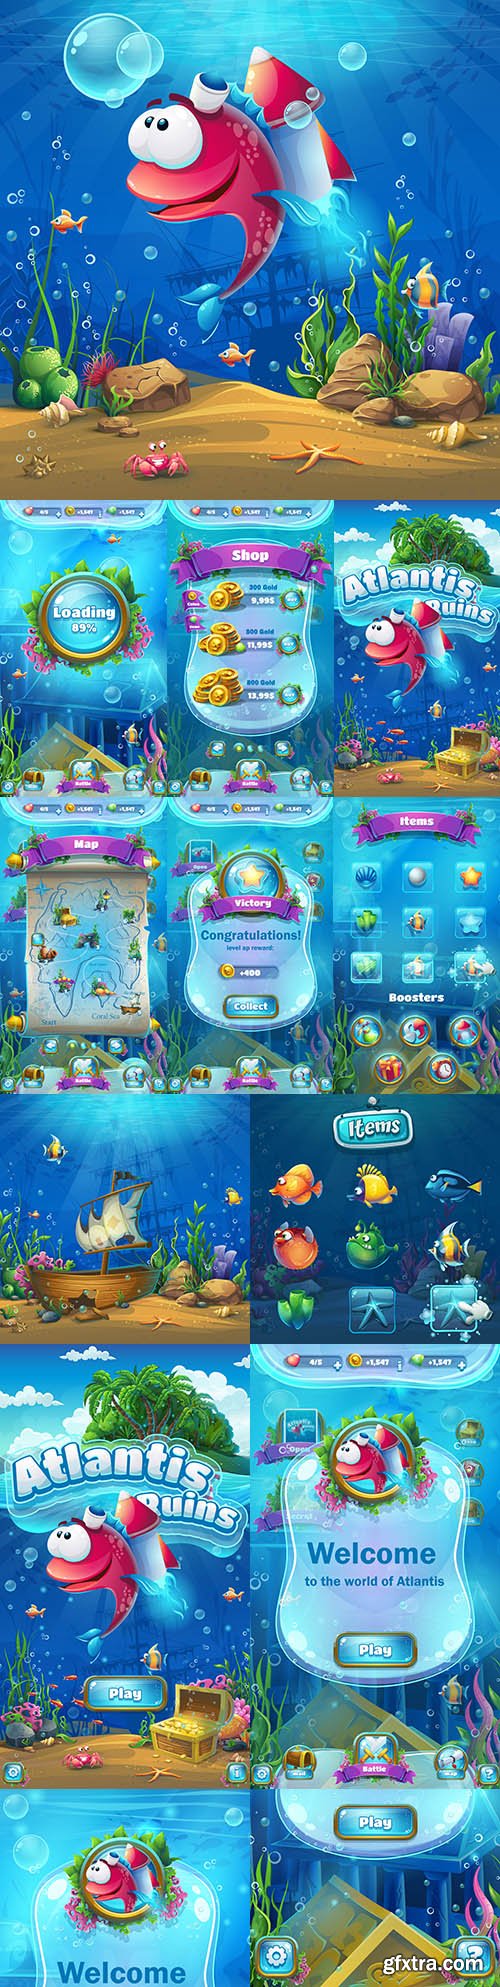 Ruins Atlantis interface game with underwater scene